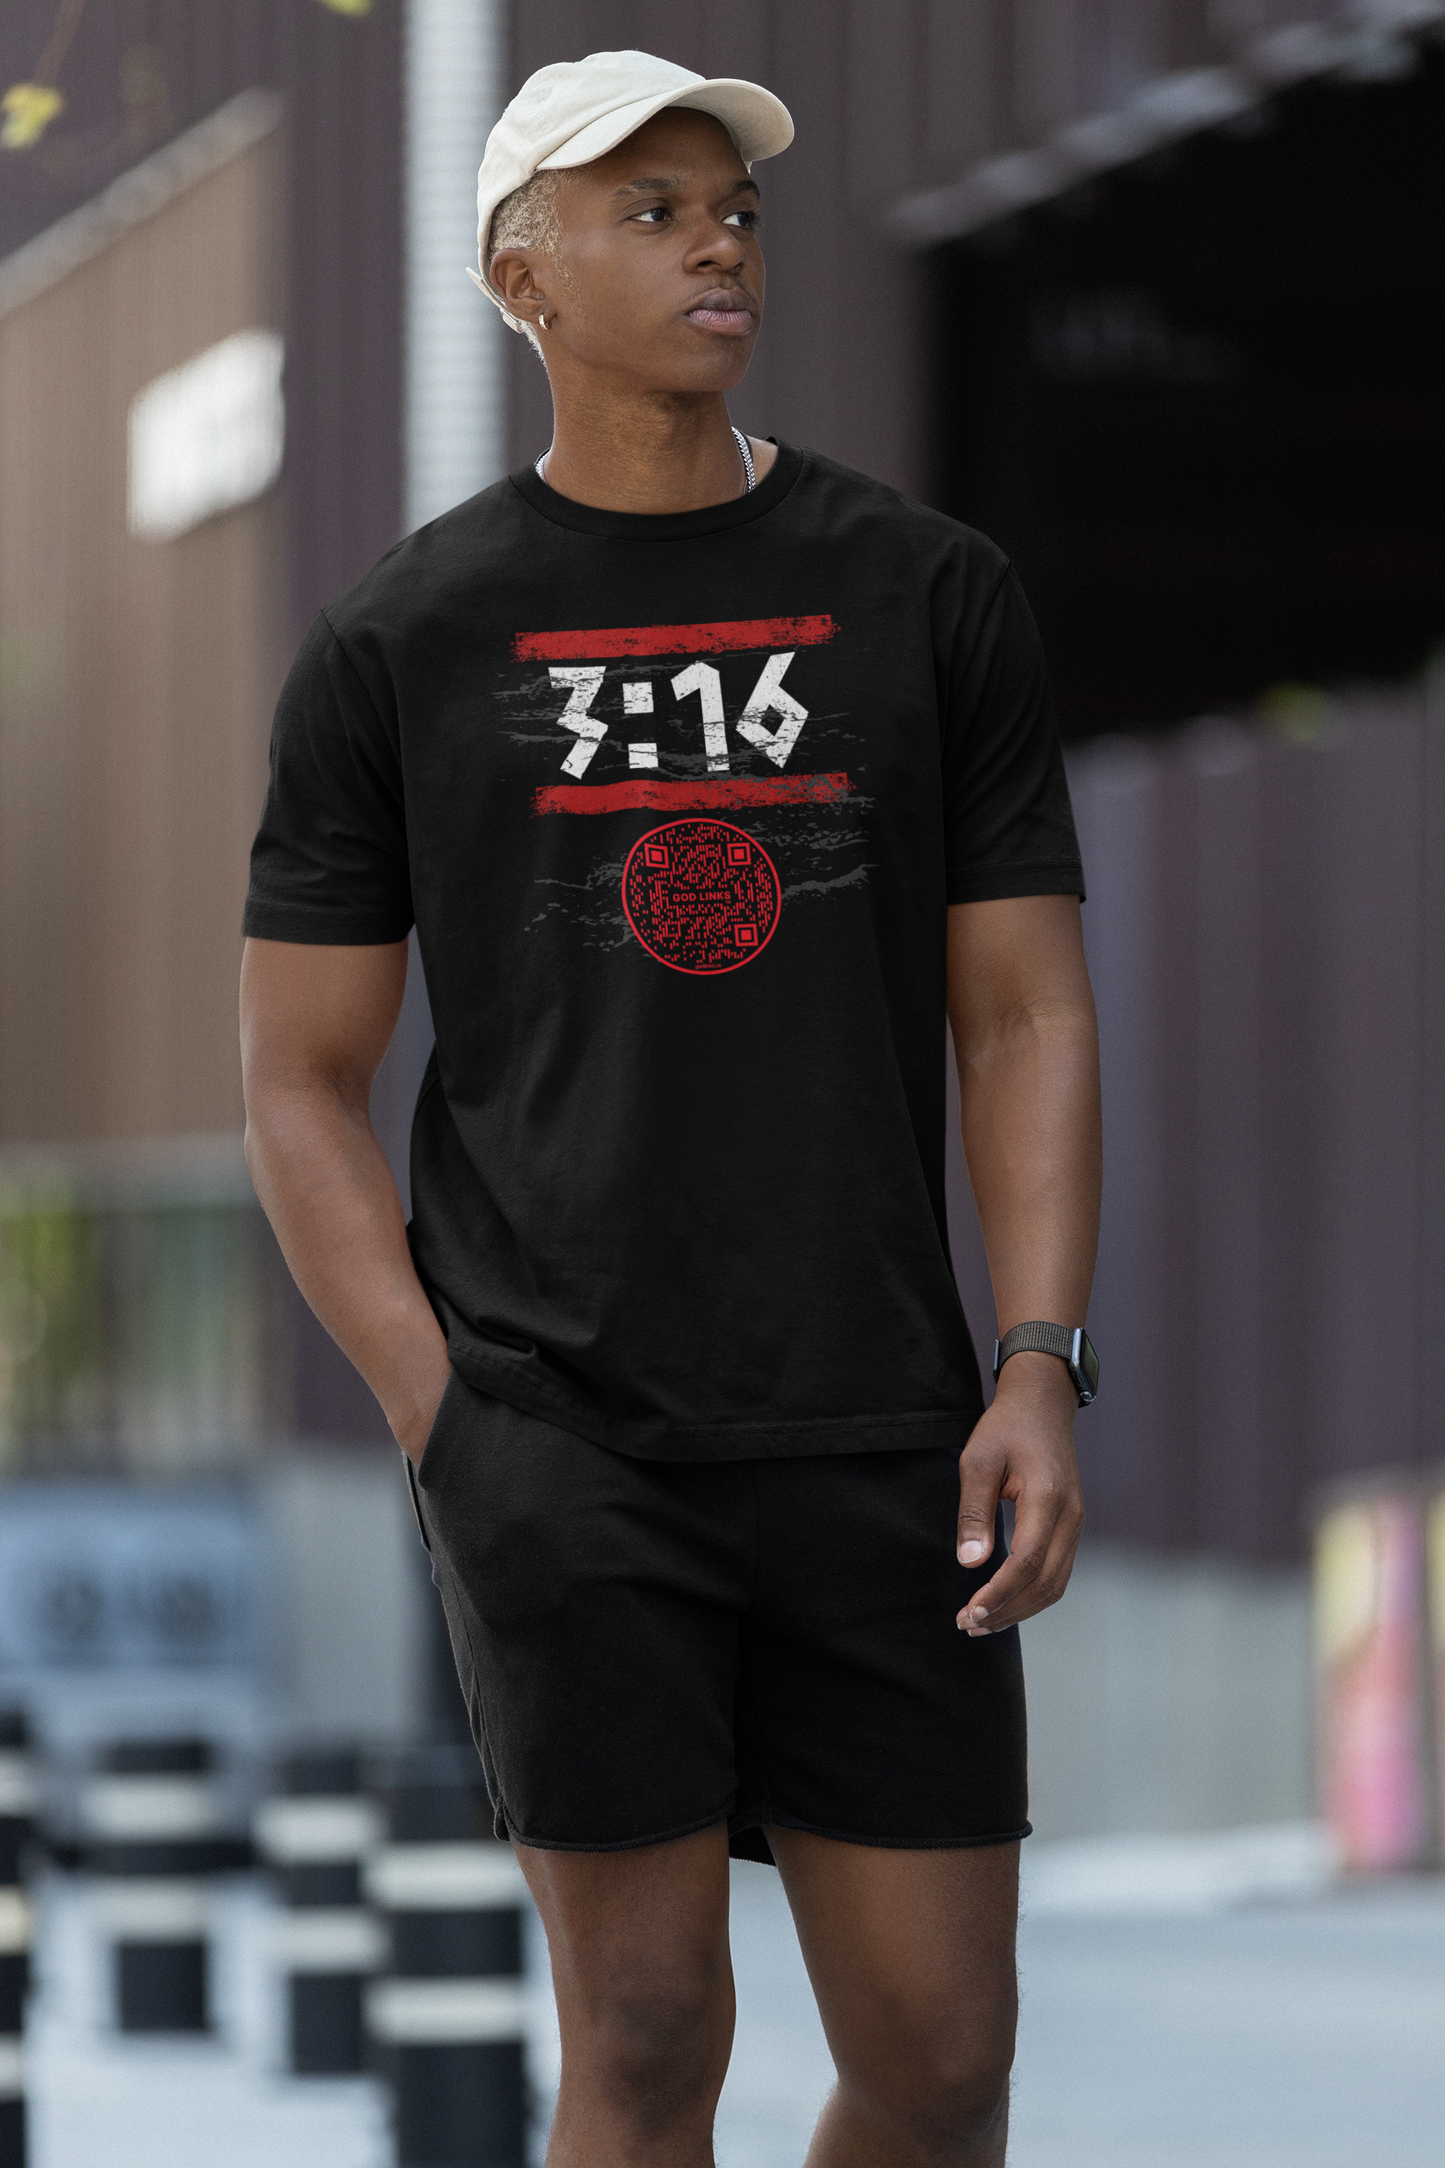 3:16-RED-Unisex t-shirt